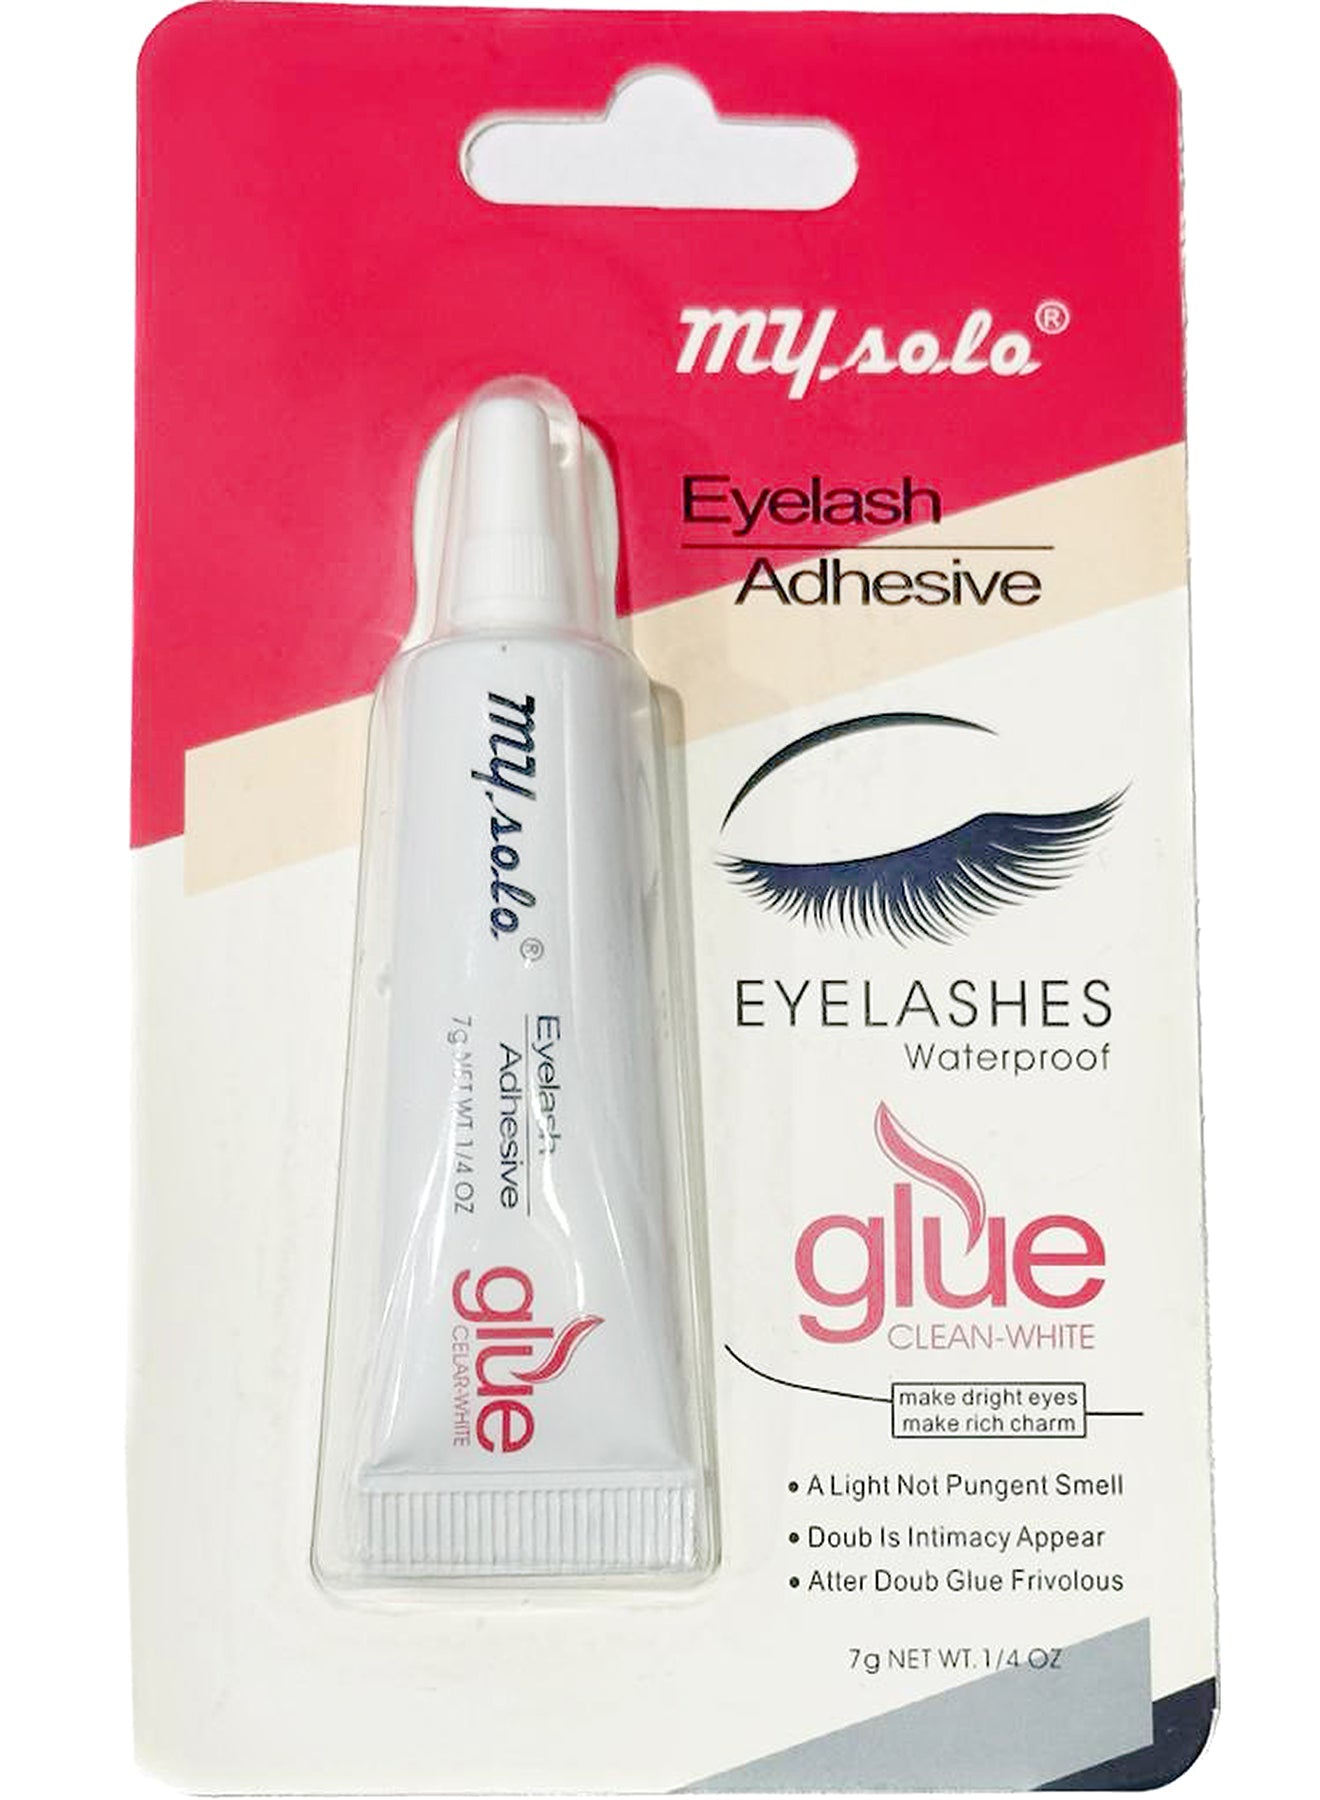 Mysolo Eyelash Adhesive Glue Clean White 7g Value Pack of 2 